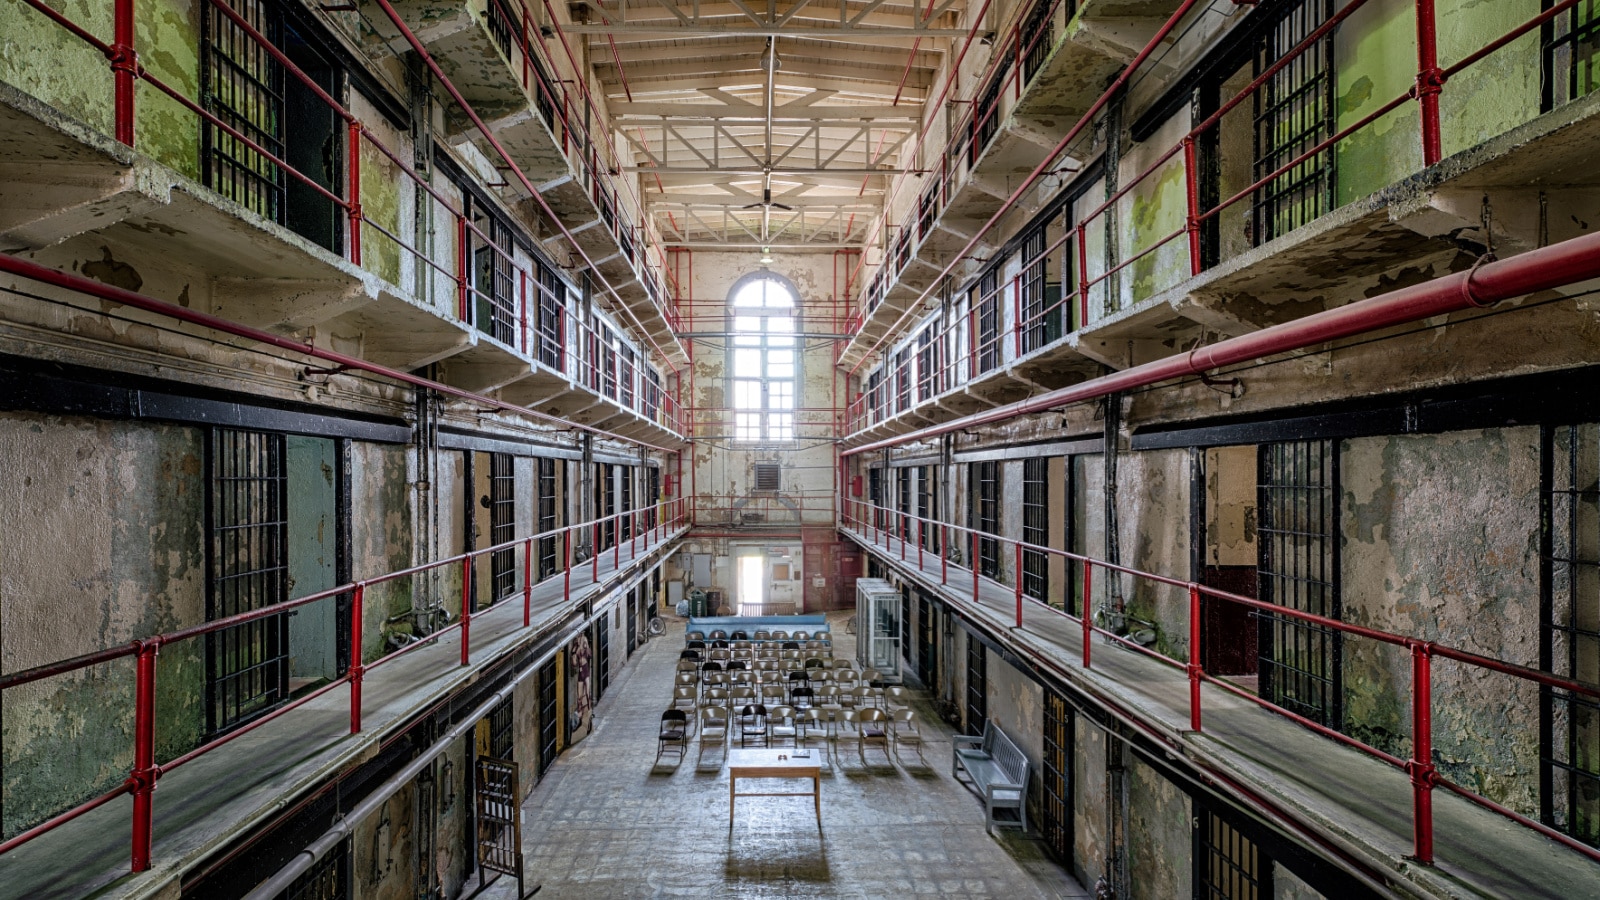 JEFFERSON CITY, MISSOURI - JULY 22: Cell block of the Missouri State Penitentiary on July 22, 2014 in Jefferson City, Missouri